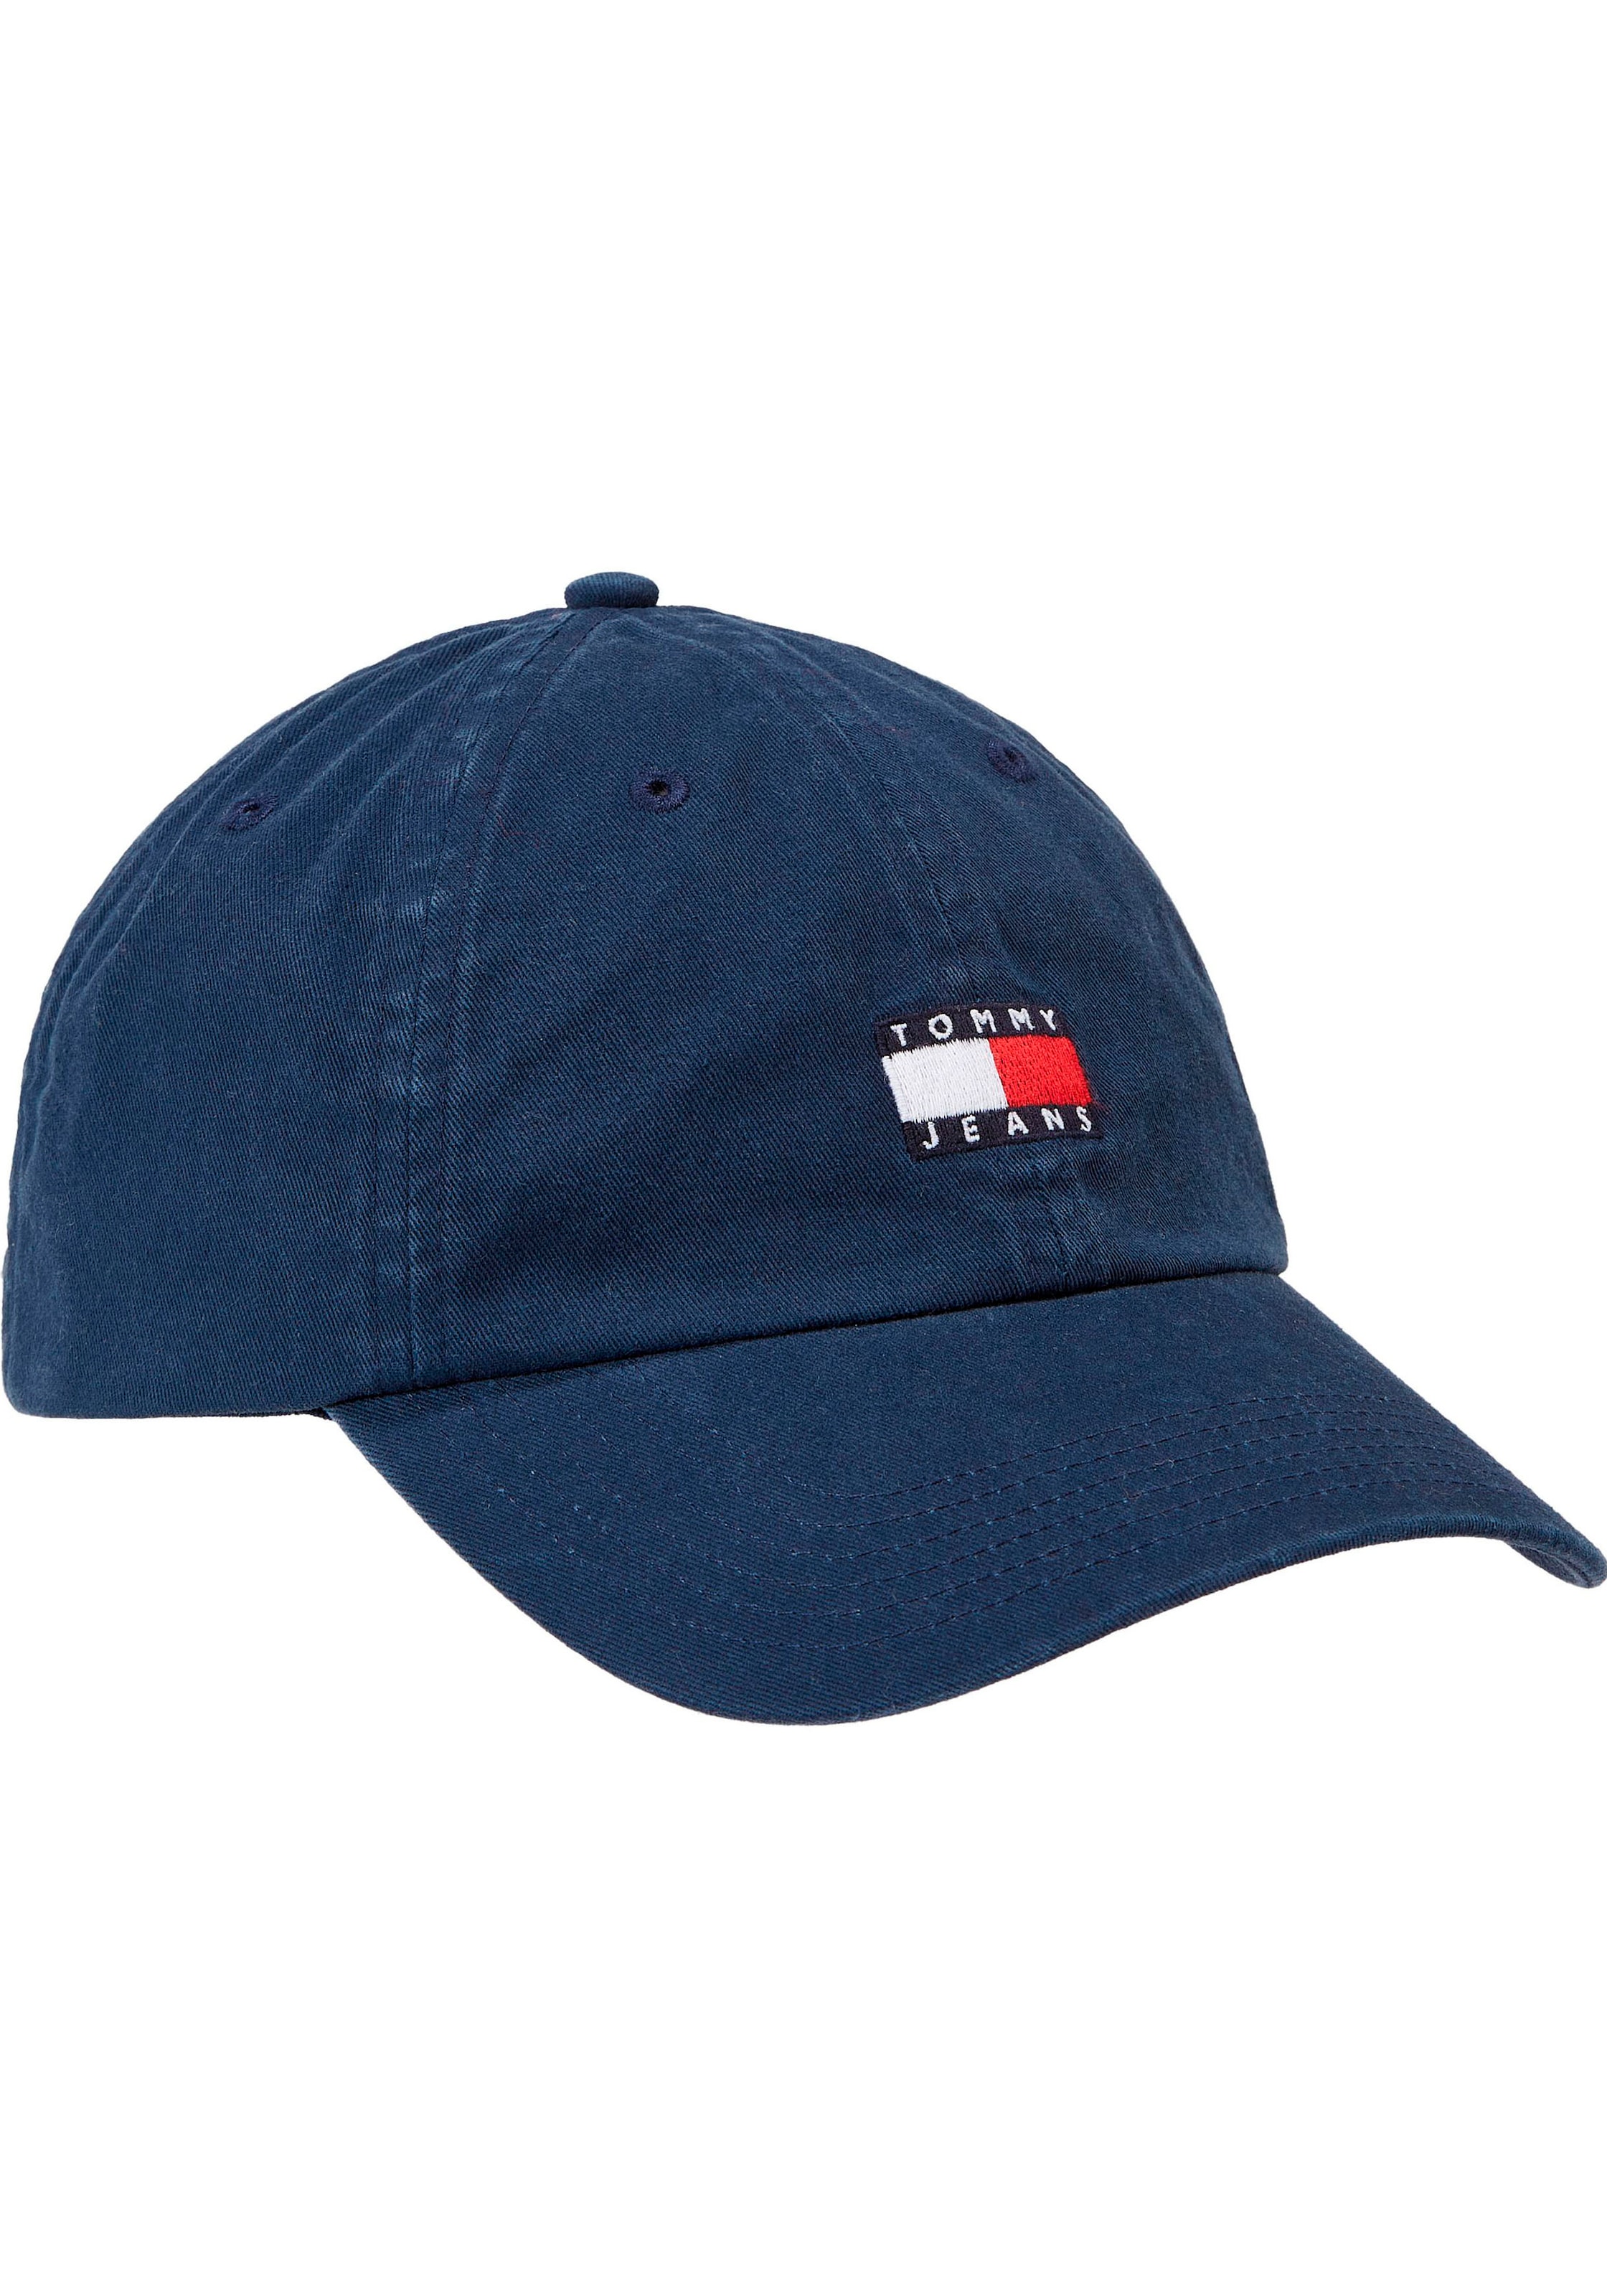 Jeans Baseball CAP« Tommy Cap kaufen im Online-Shop HERITAGE »TJM